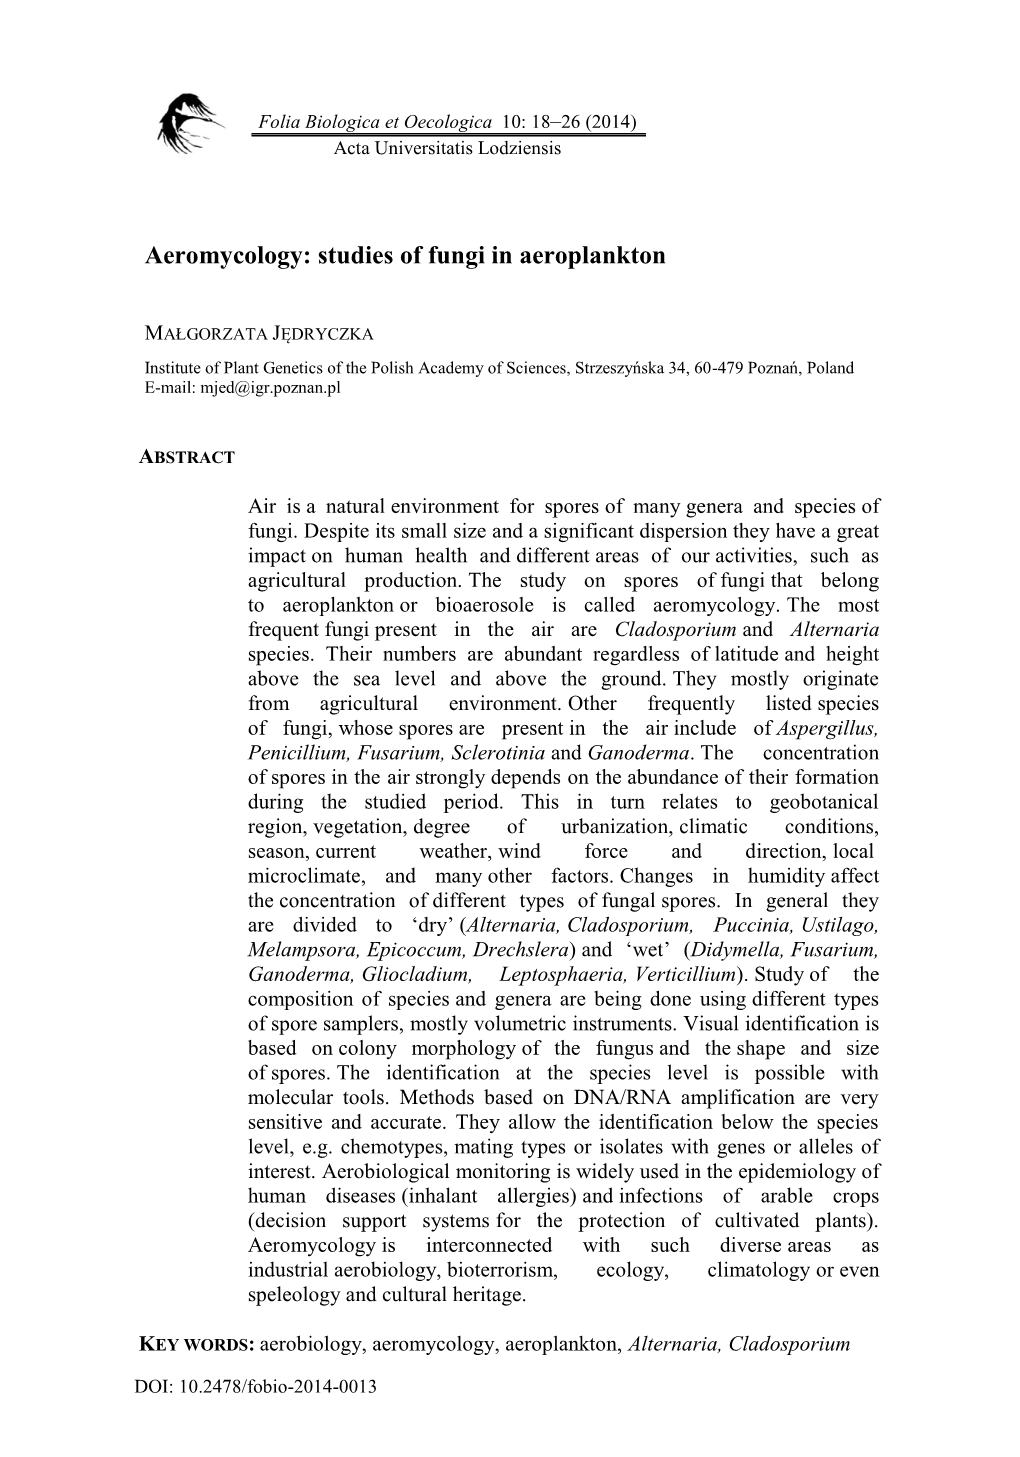 Aeromycology: Studies of Fungi in Aeroplankton